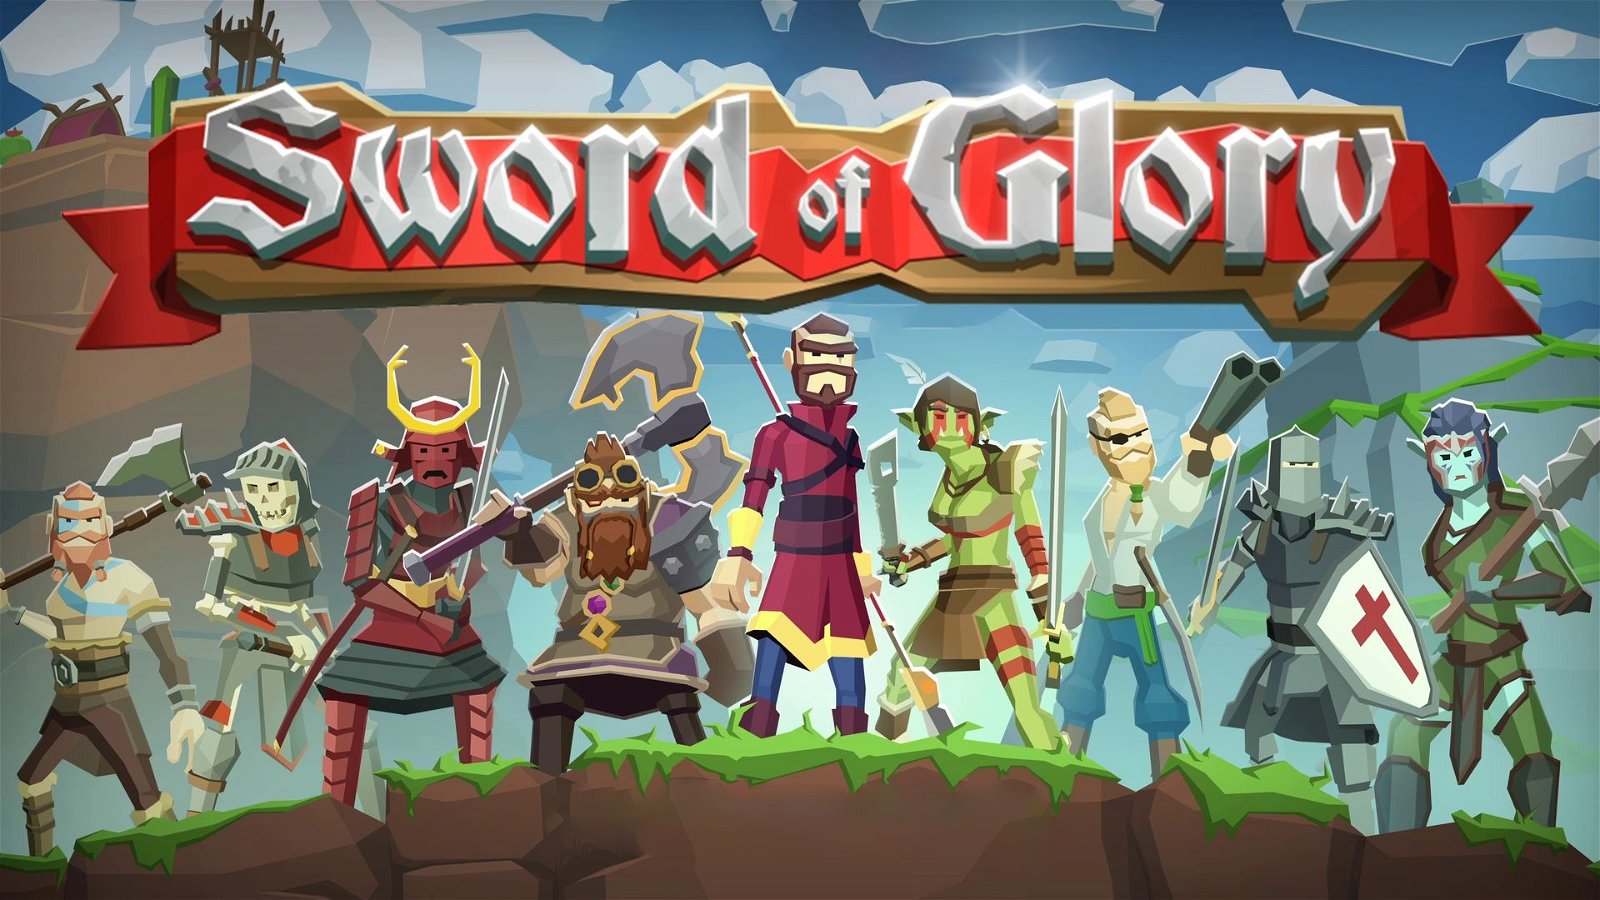 Image of Sword of Glory